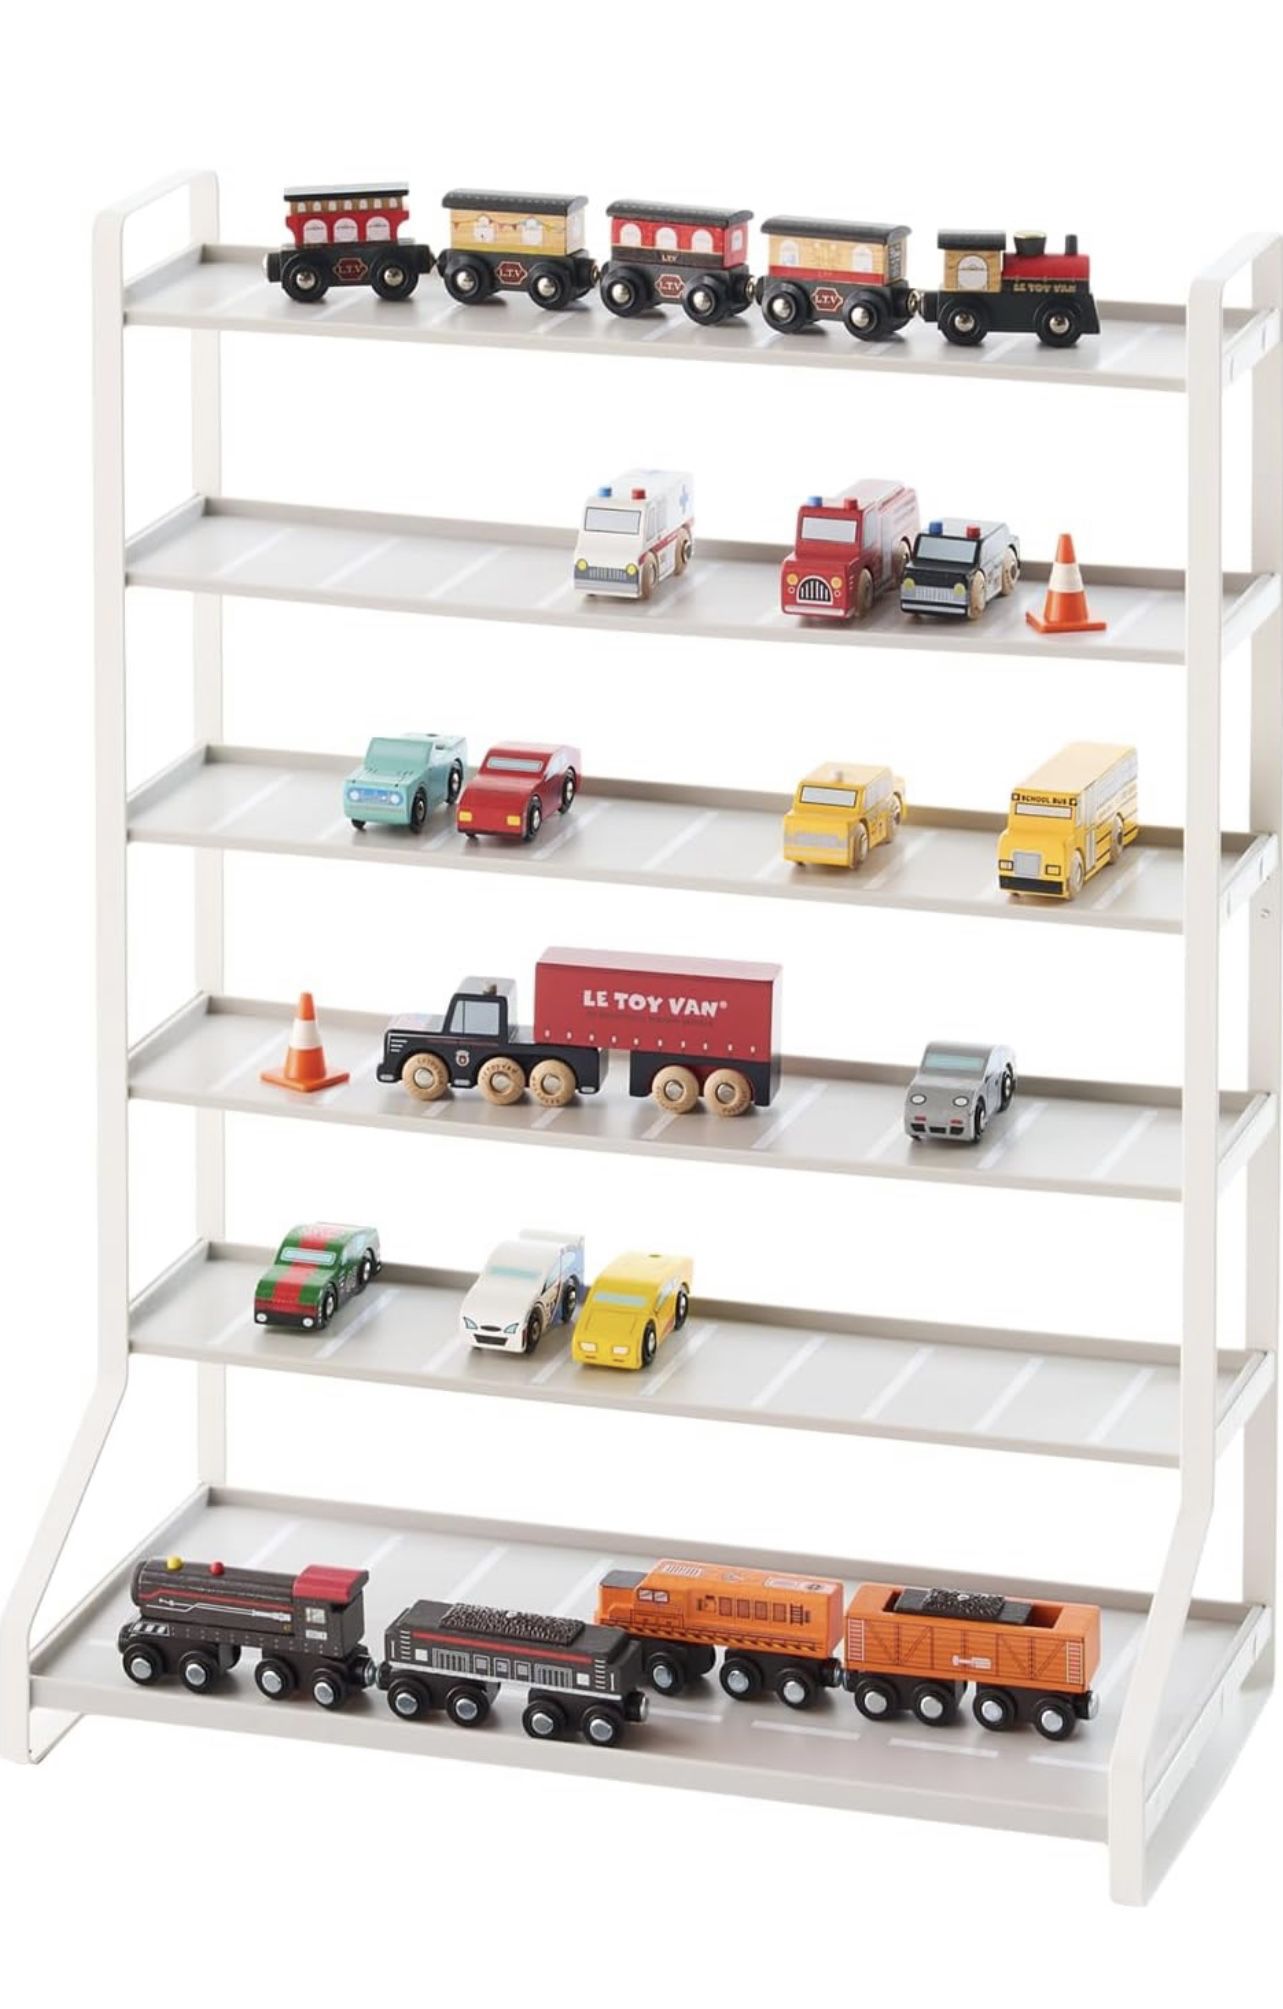 Parking Garage Home Train Hotwheels Model Car Display | Kids Steel, Plastic | Toy Storage, One Size, White